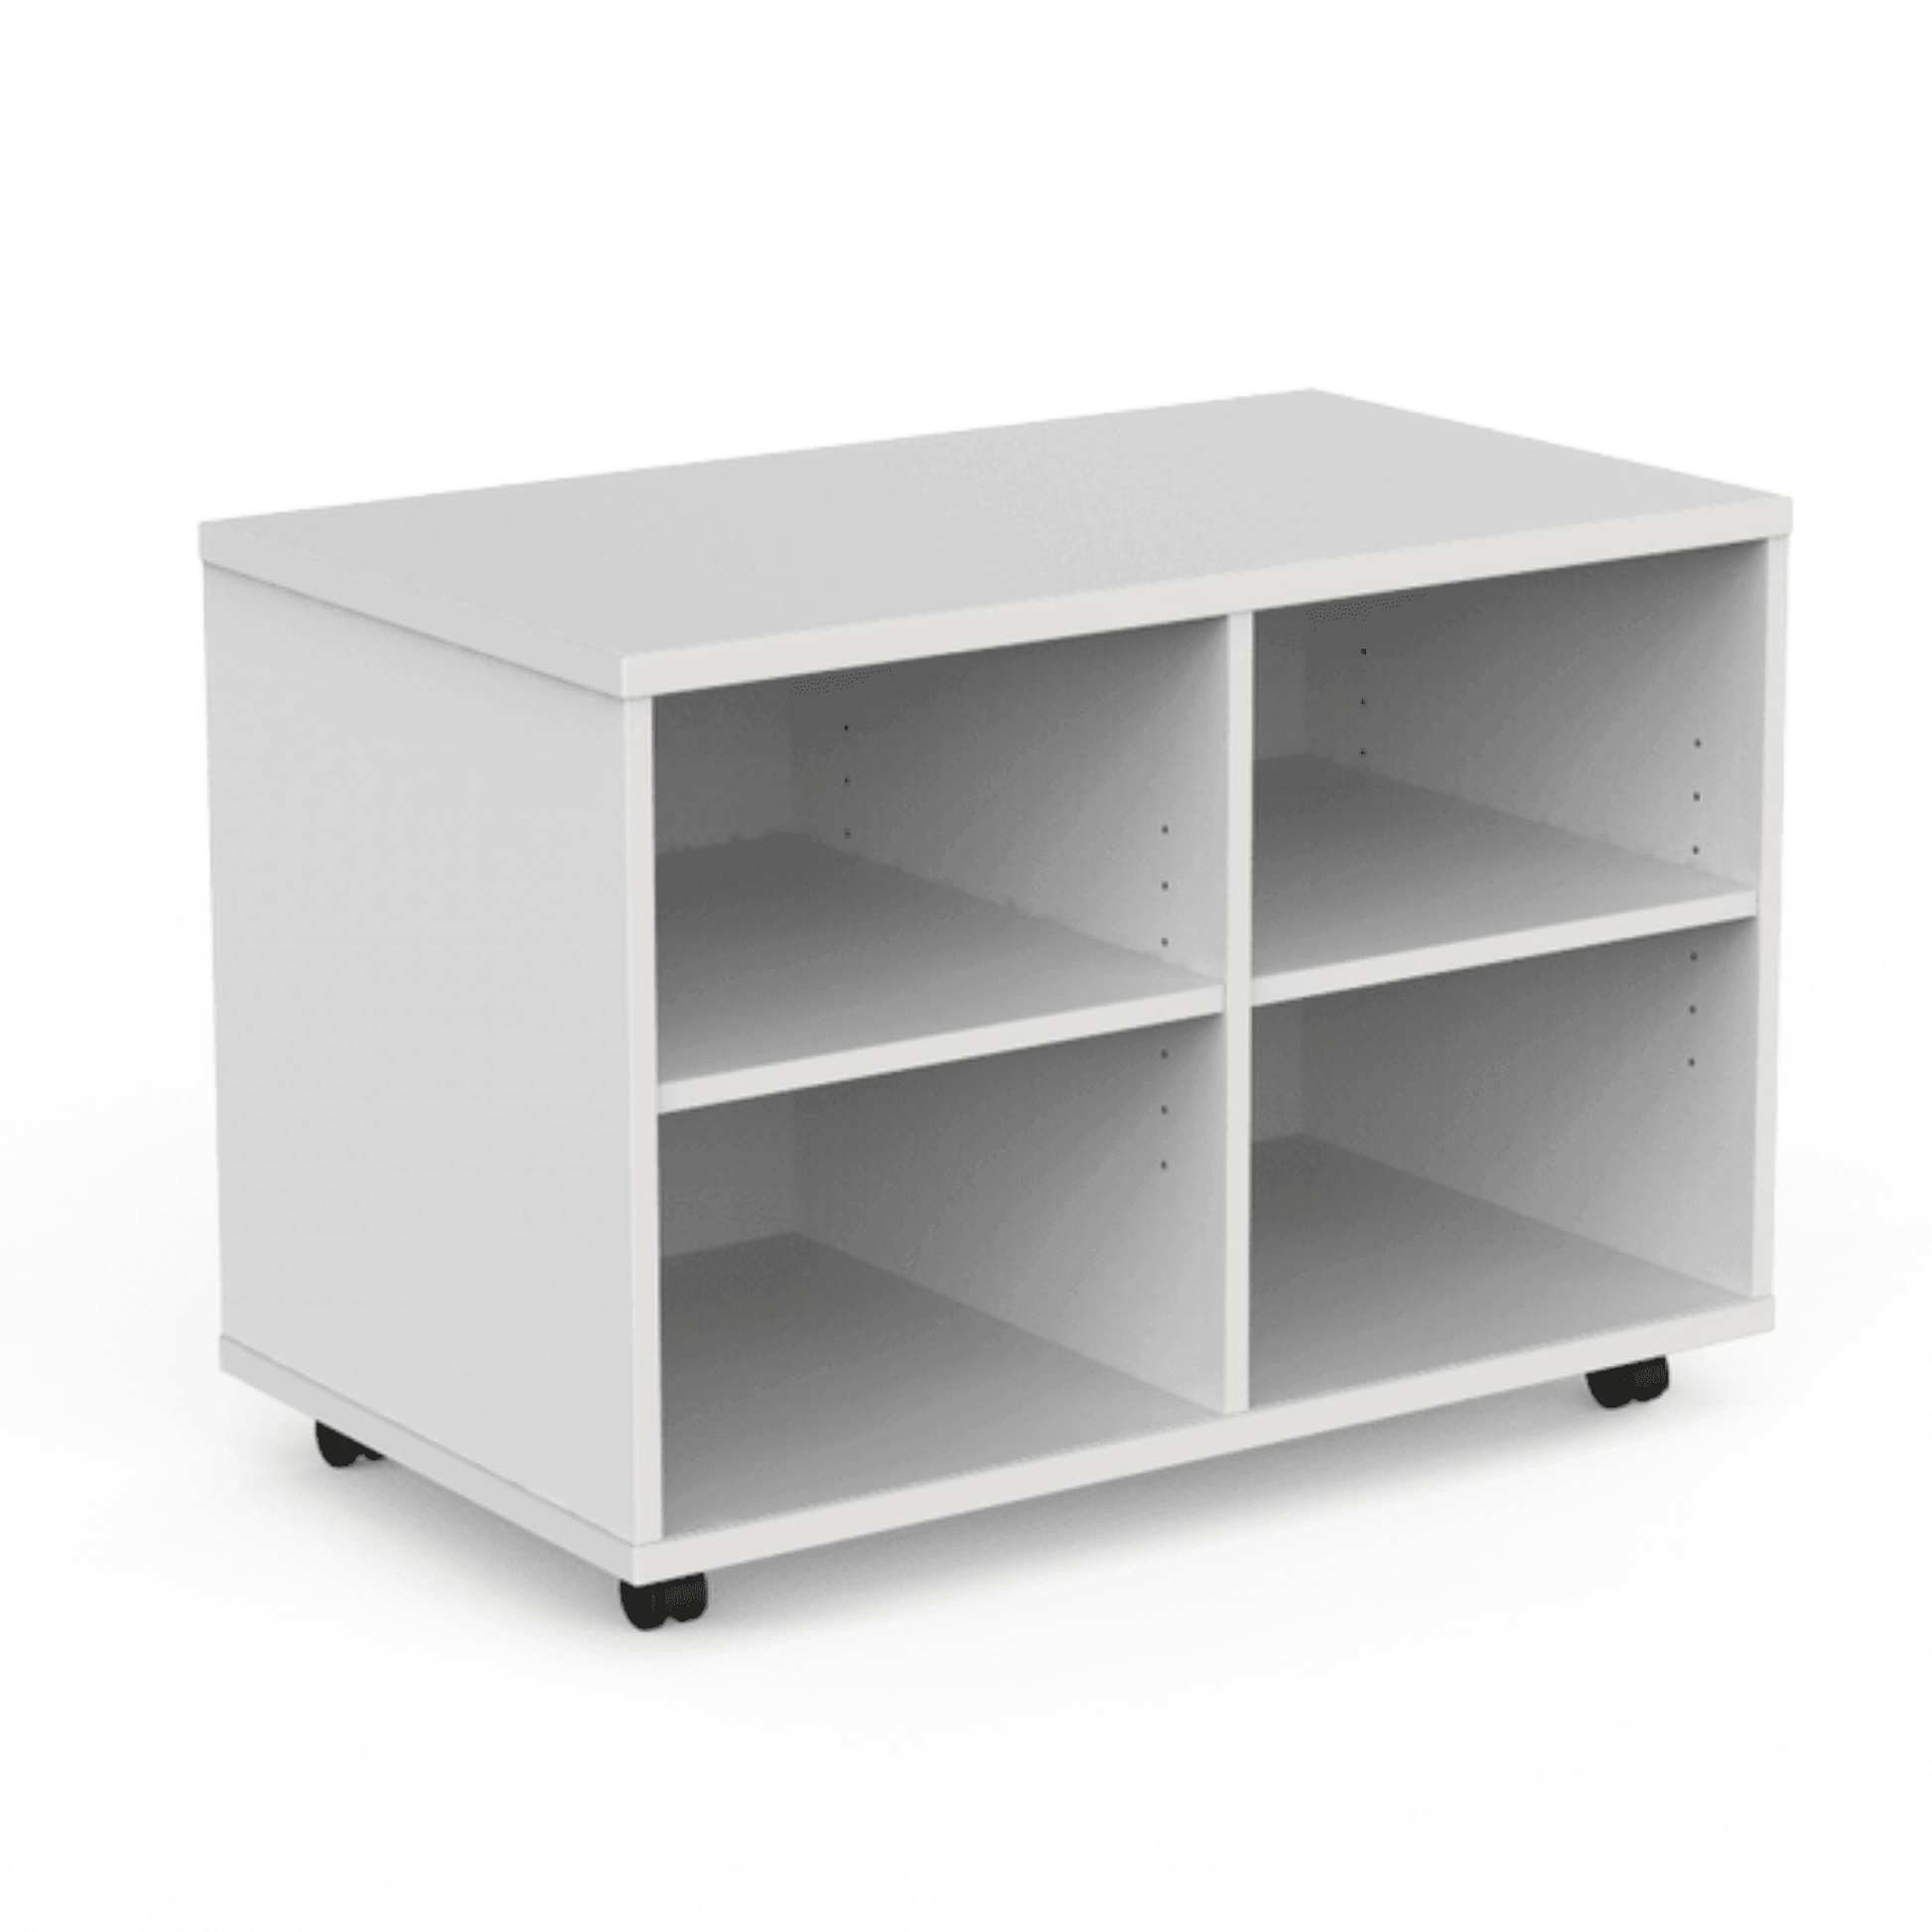 EkoSystem Mobile Book Case Caddy - Office Furniture Company 